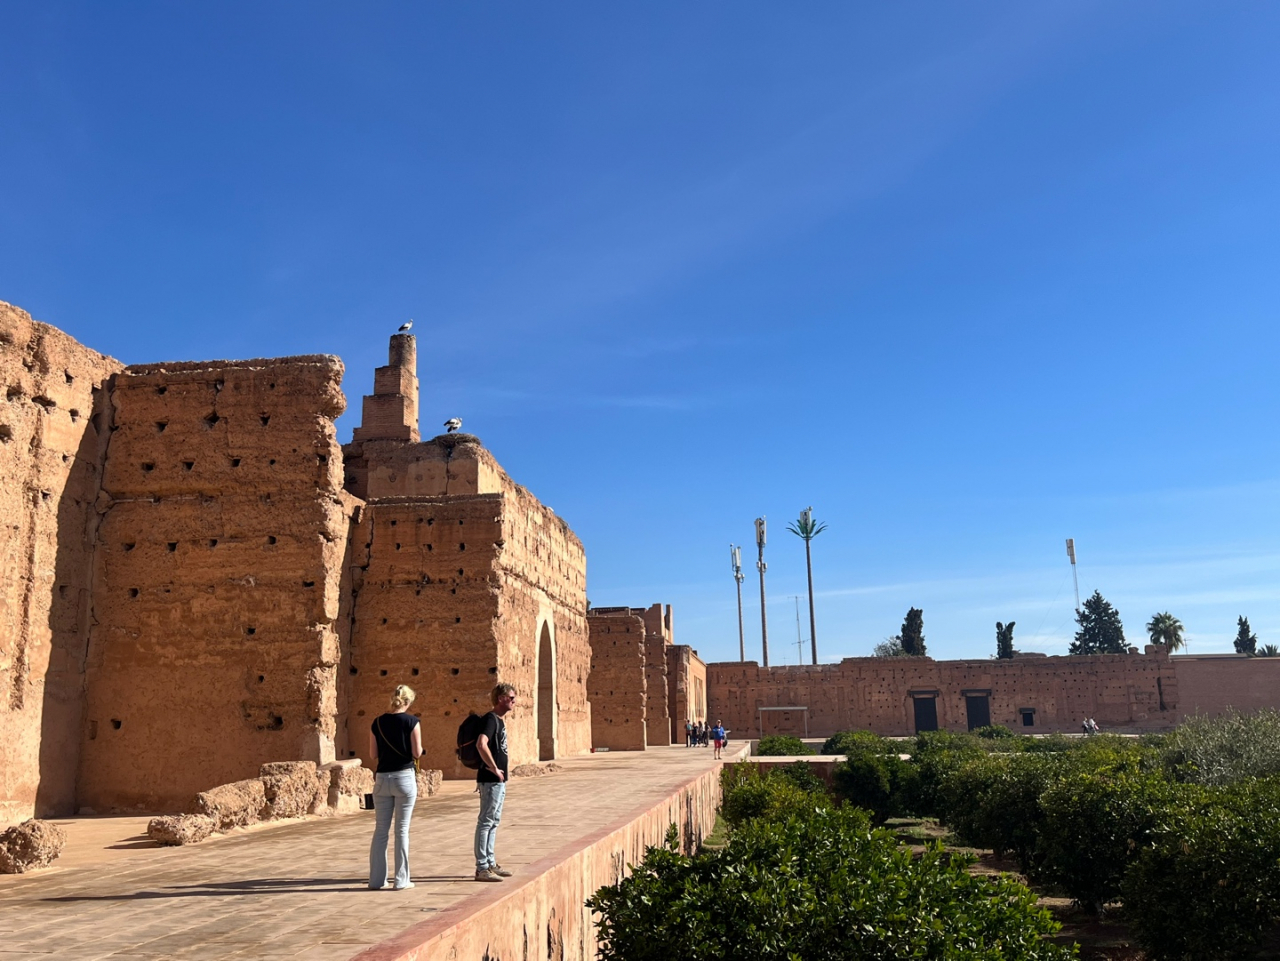 Visitors tour Badi Palace, a ruined palace built in 1578, located in Marrakesh. (Lee Jaeeun/The Korea Herald)